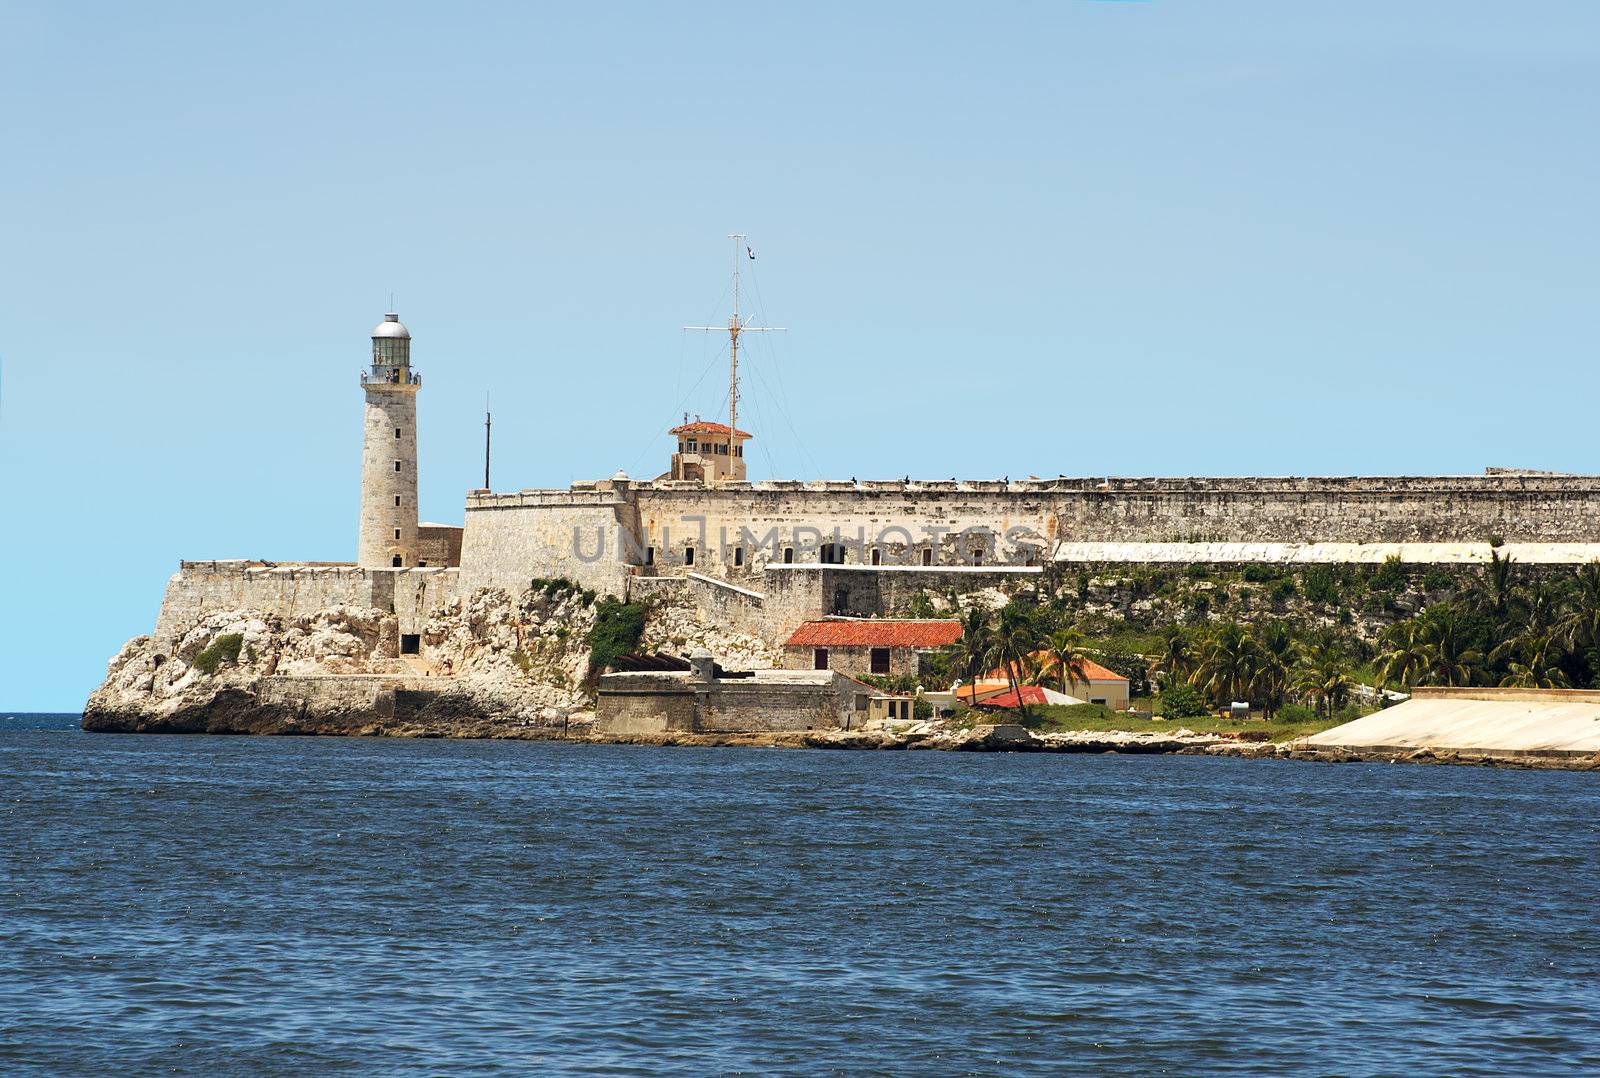 The fortress of El Morro in the bay of Havana by kmiragaya